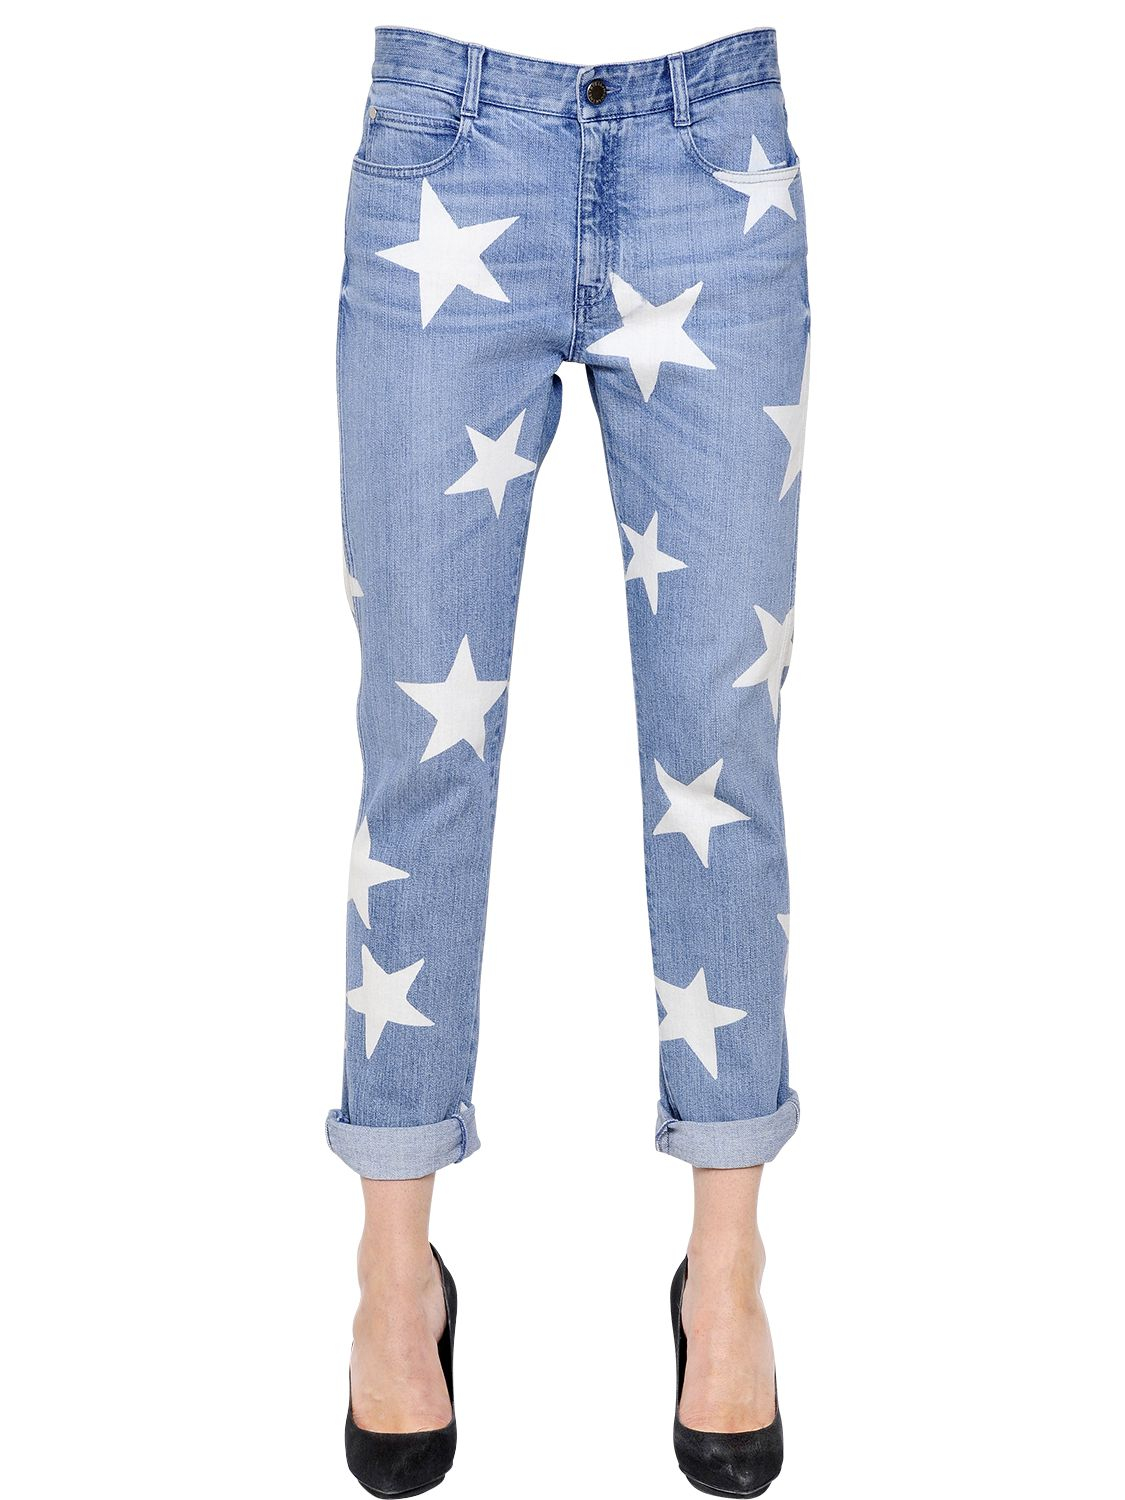 Lyst - Stella Mccartney Stars Printed Stretch Cotton Denim Jeans in Blue